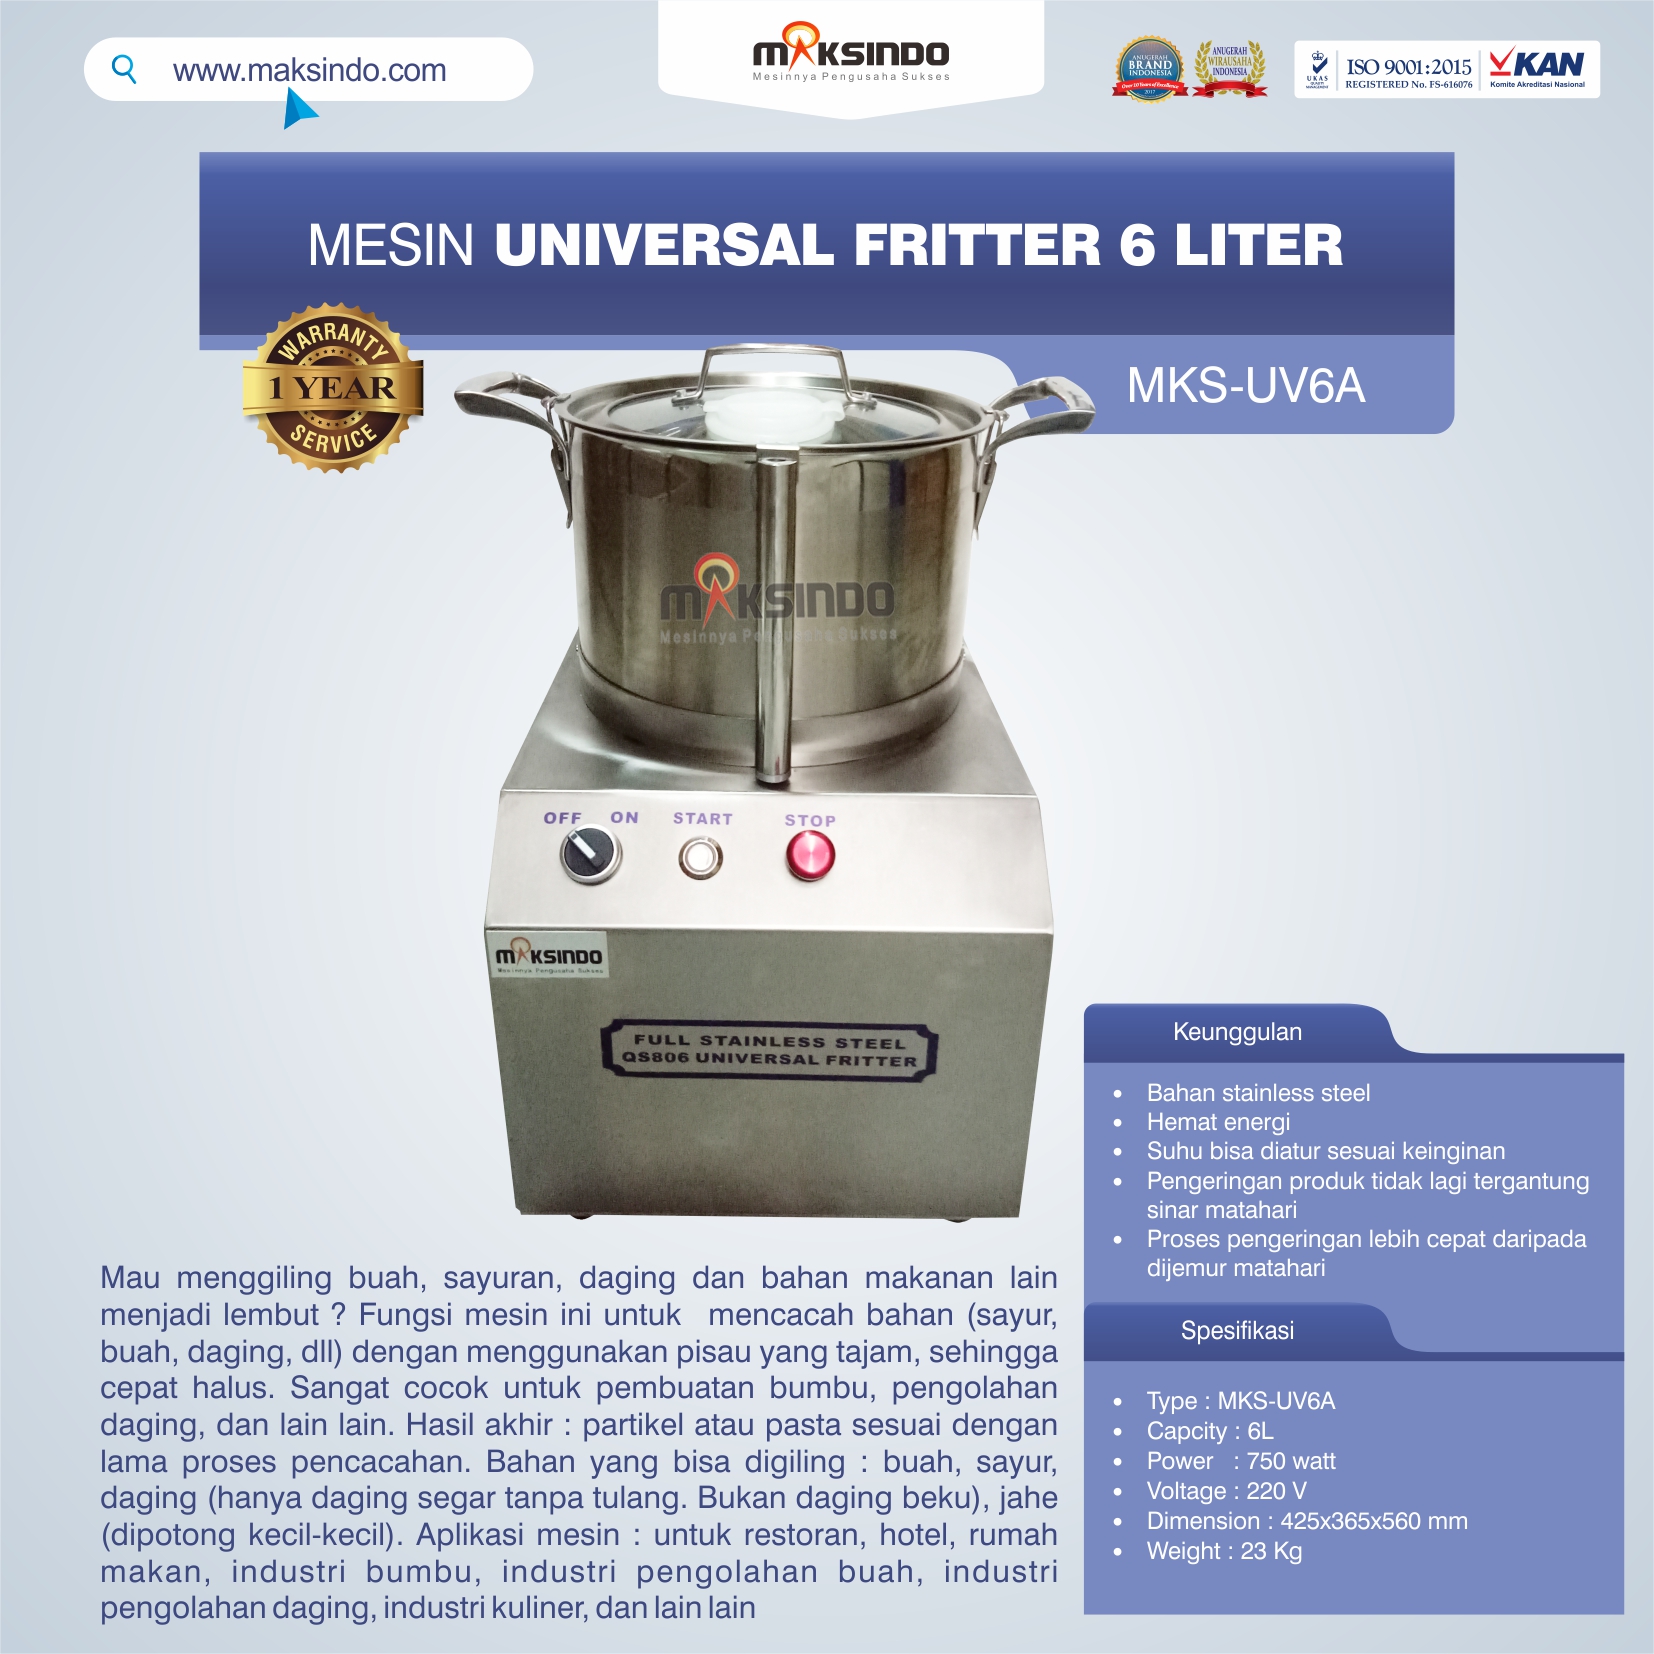 Jual Universal Fritter 6 Liter (MKS-UV6A) di Bandung